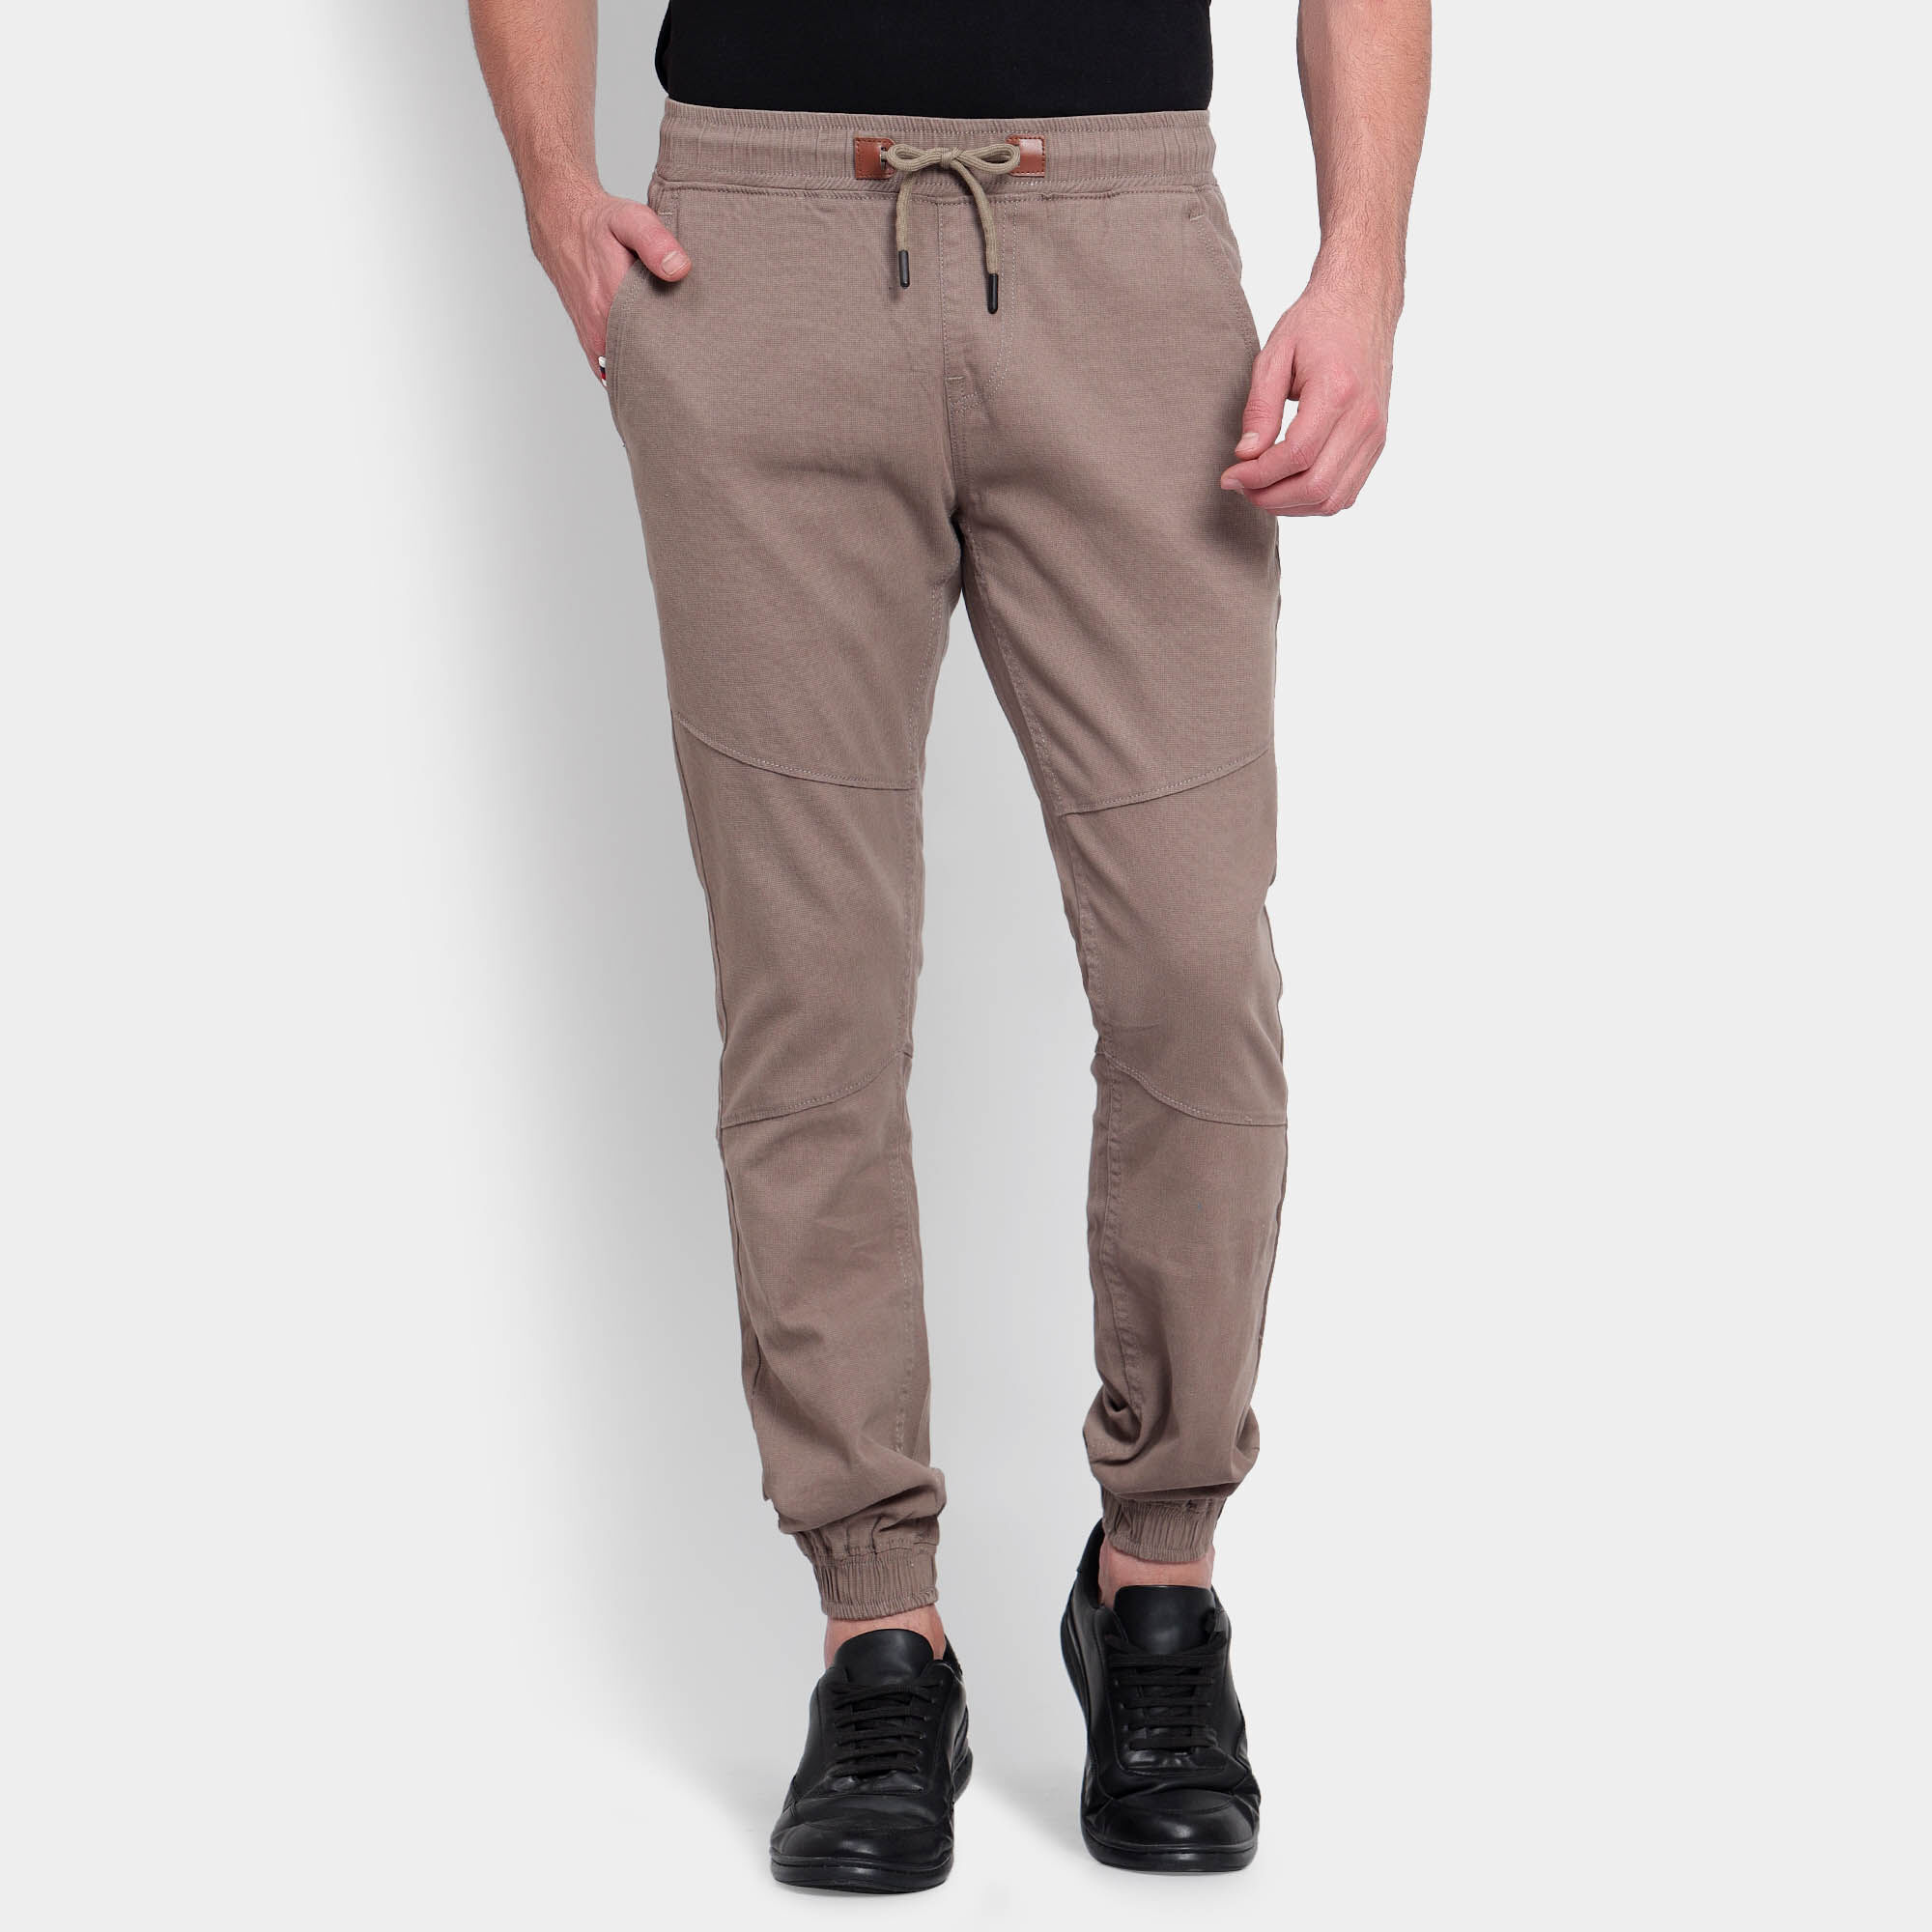 Buy Tommy Hilfiger Men's Slim Fit Pants (S23HMND129_New Vintage Khaki_34)  at Amazon.in